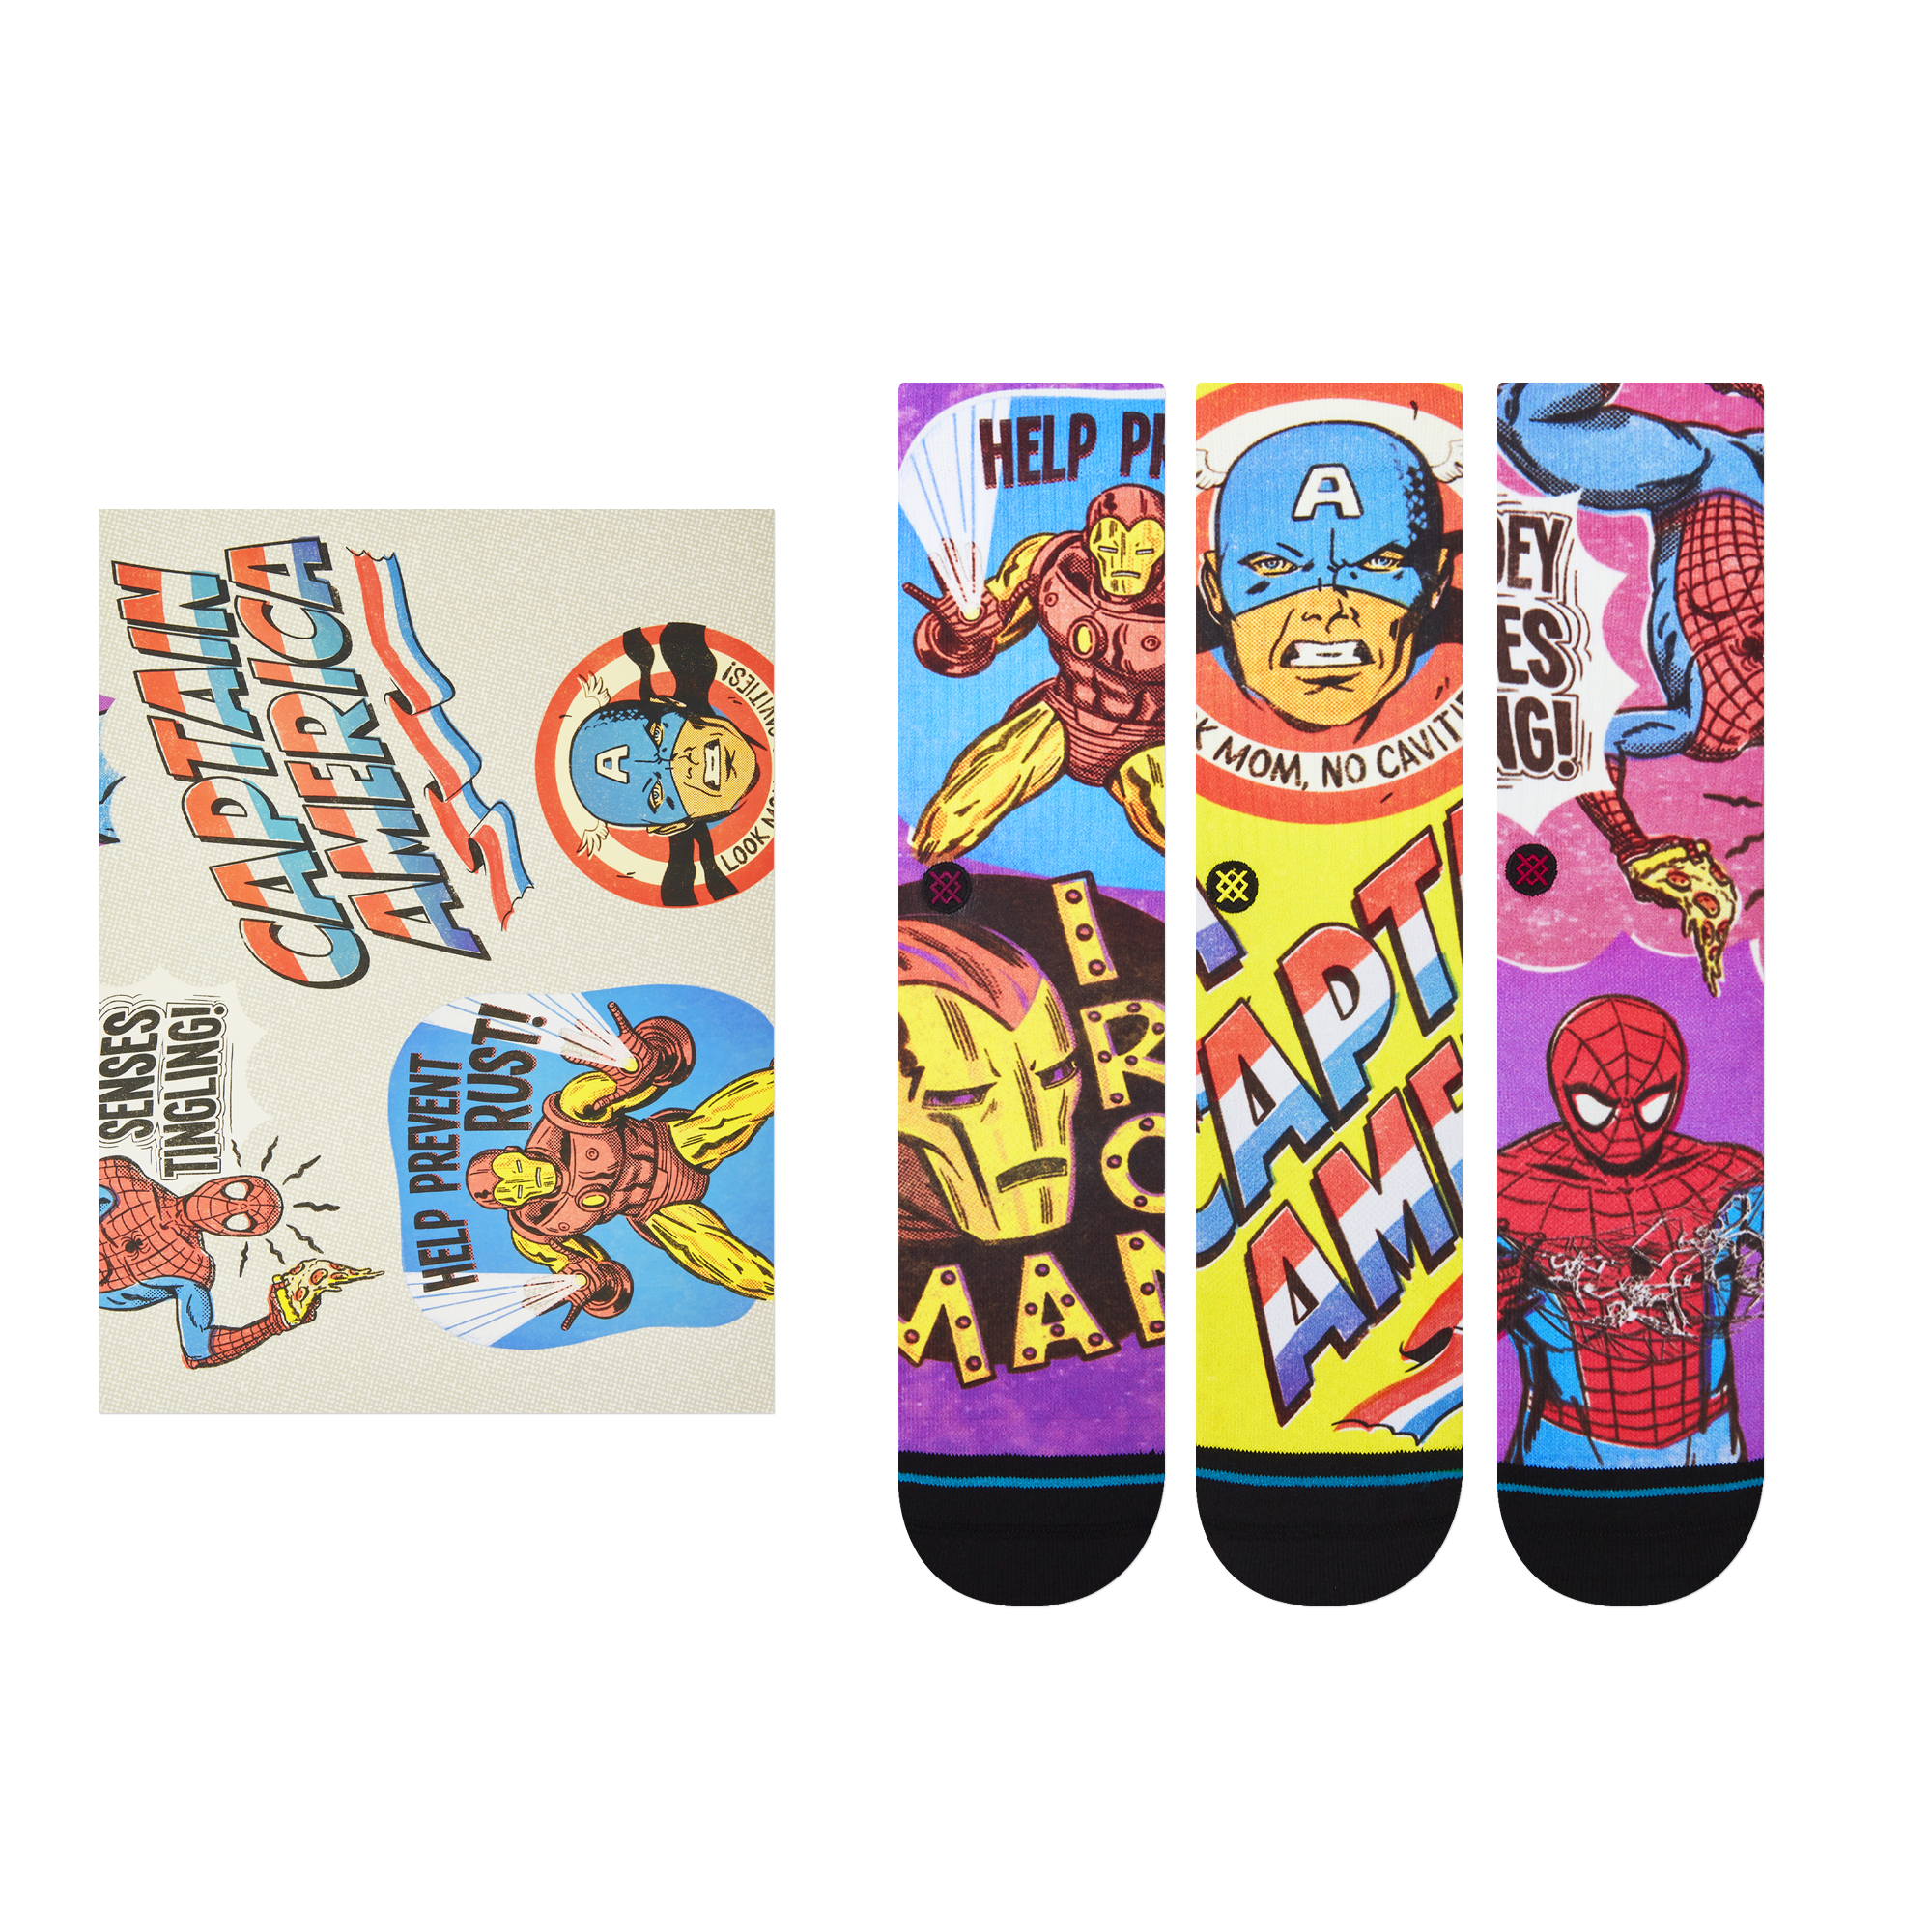 Pack of 3 pairs of Marvel socks